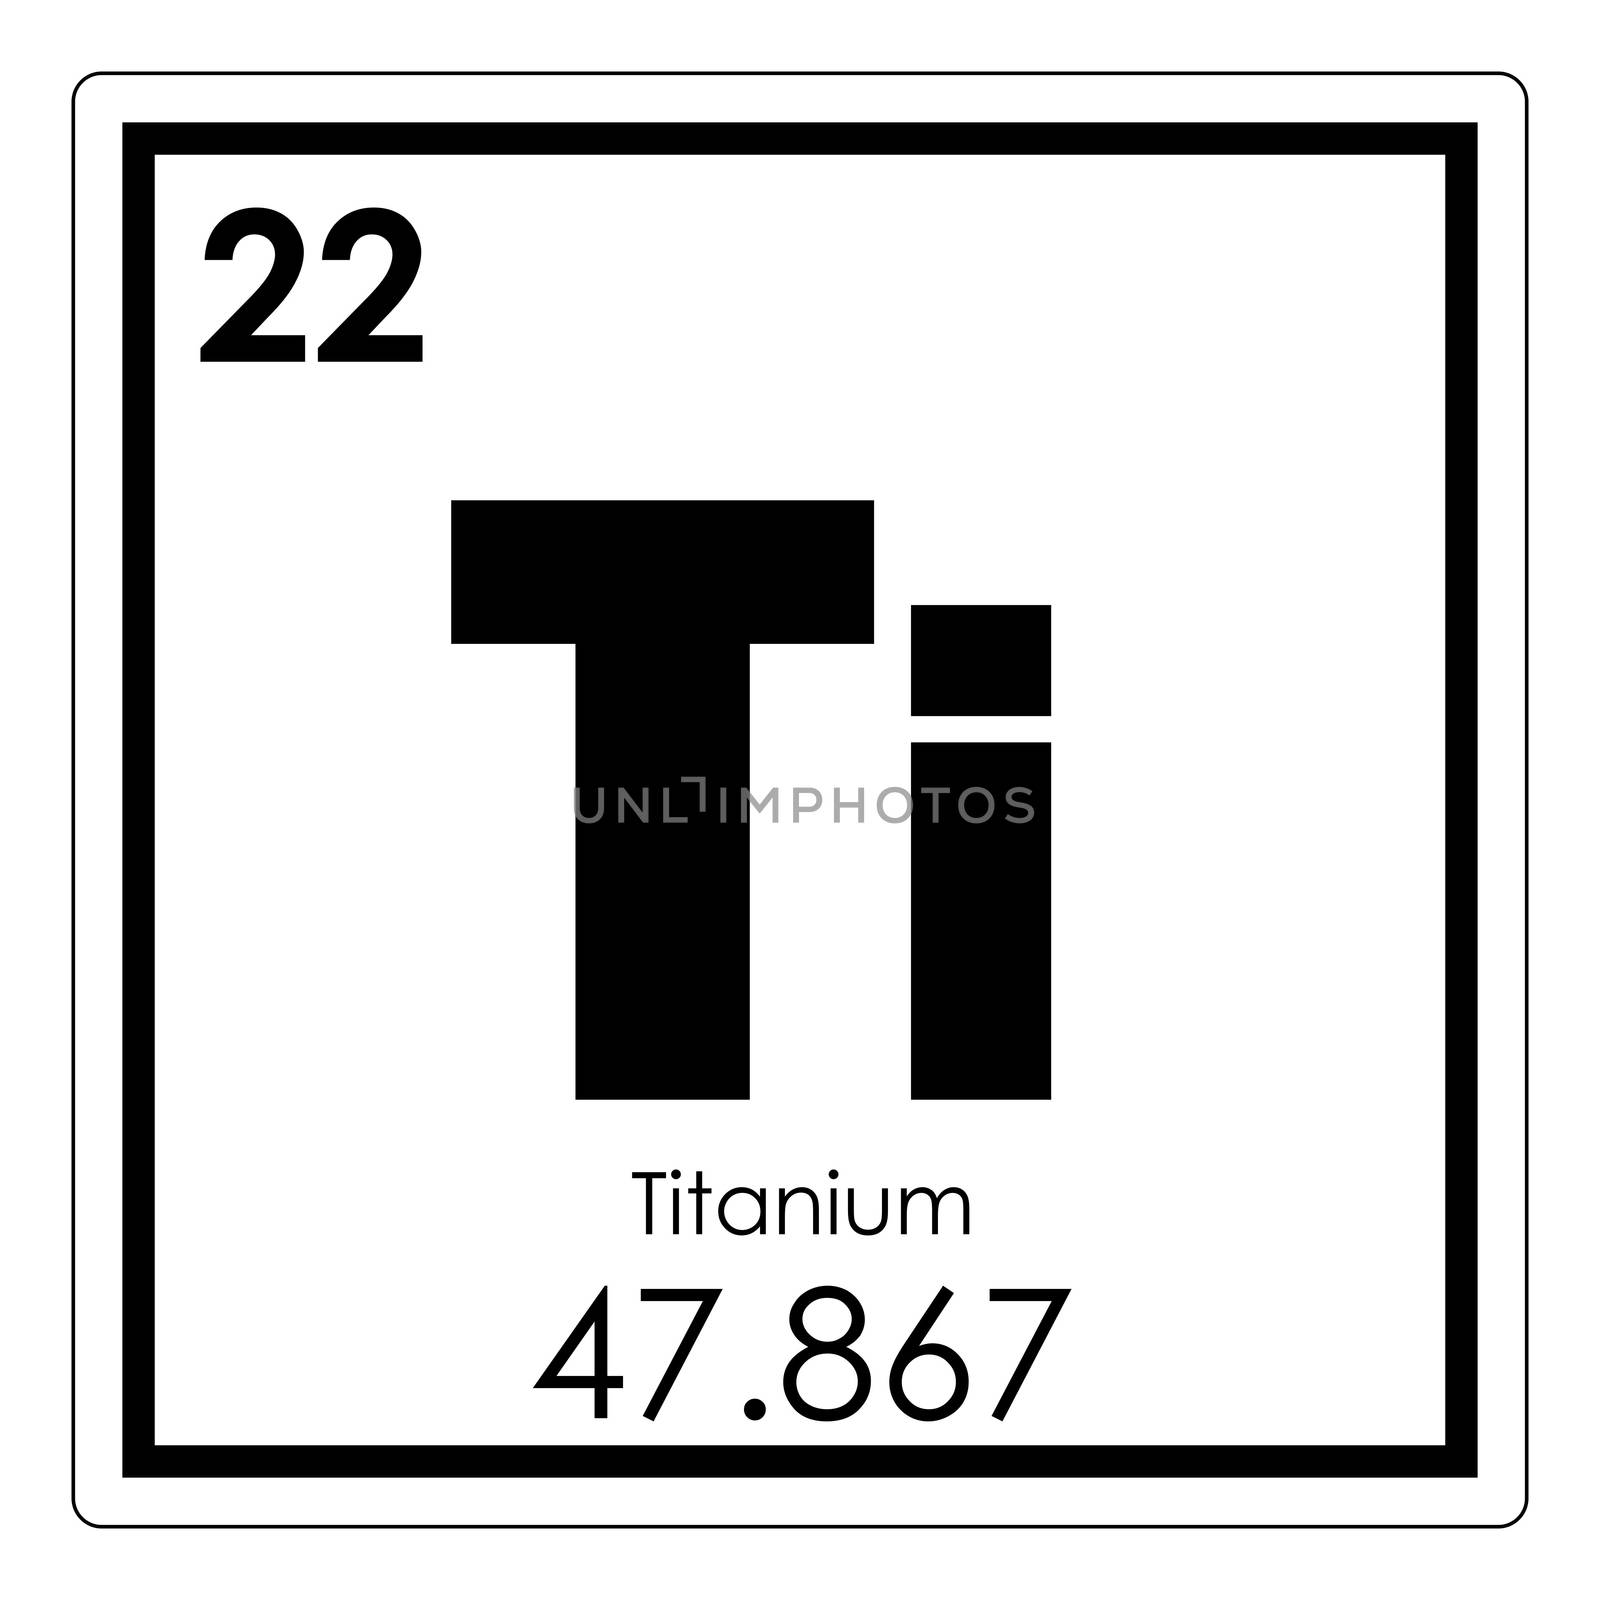 Titanium chemical element by tony4urban